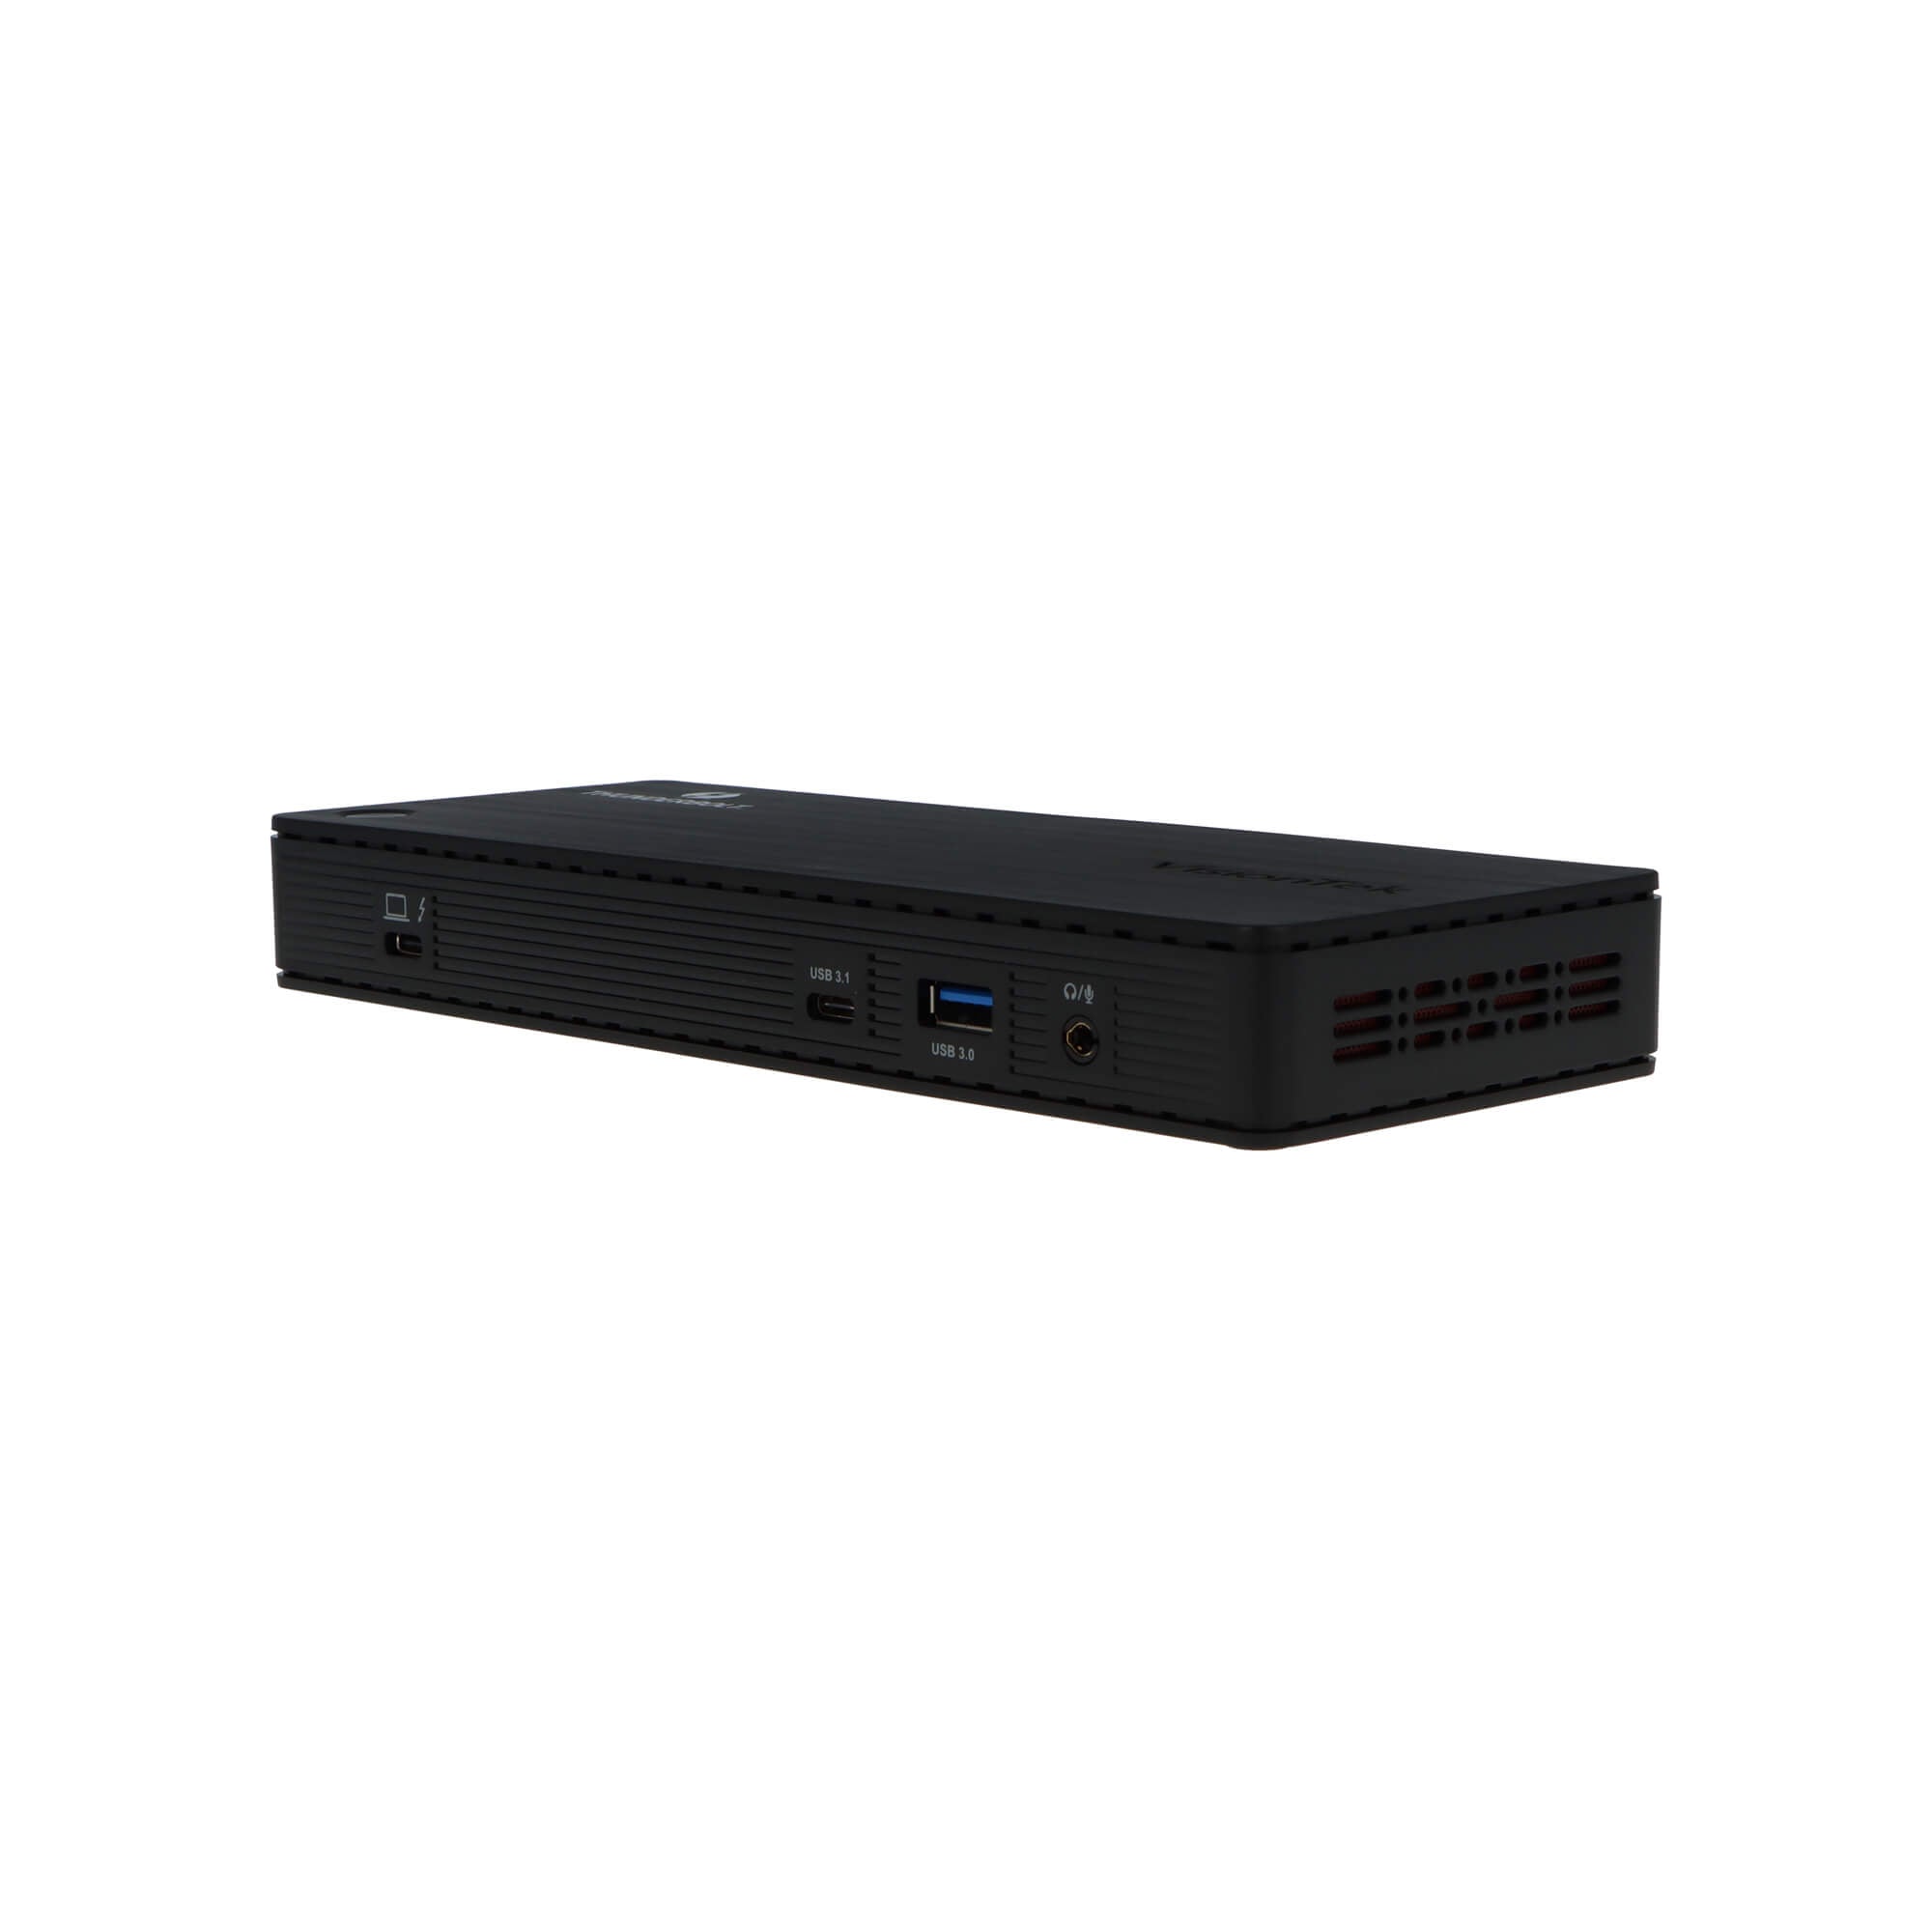 Thunderbolt 3 Dock - 8K DisplayPort, USB 3.2 Gen 2, Ethernet, USB